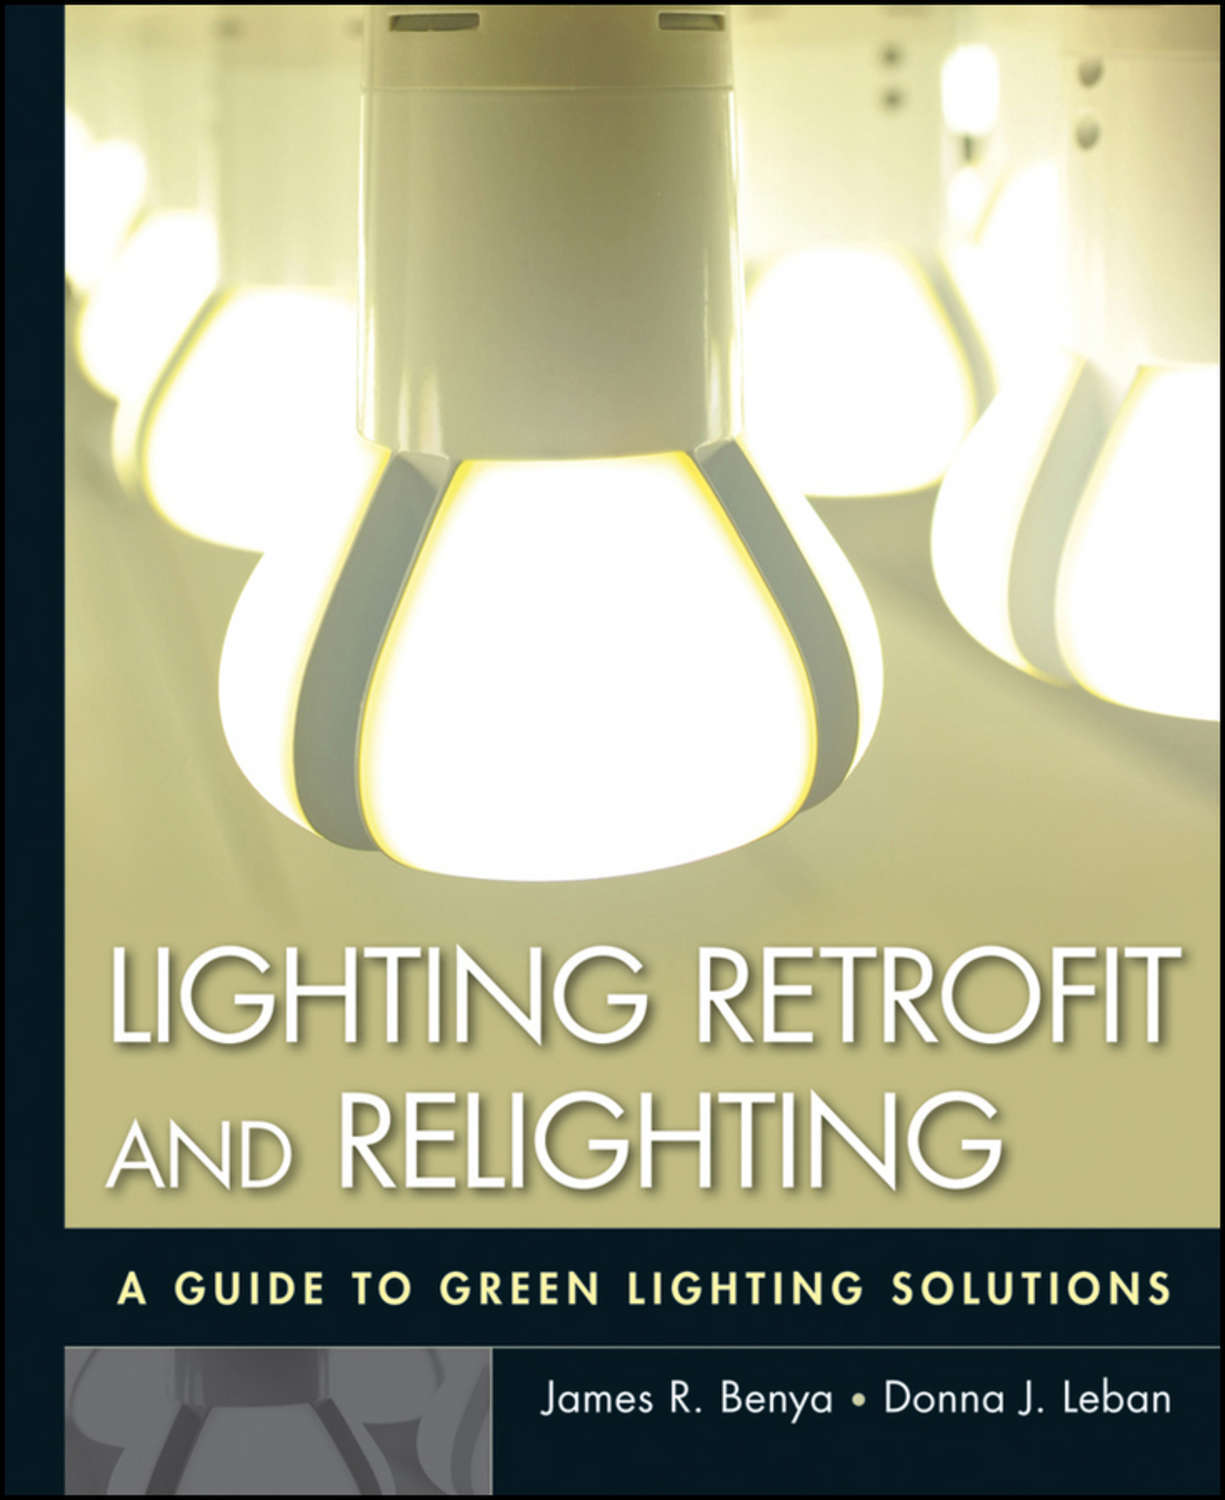 Время свет книга. Lighting Retrofit. Светотехника книга. Green Light book.